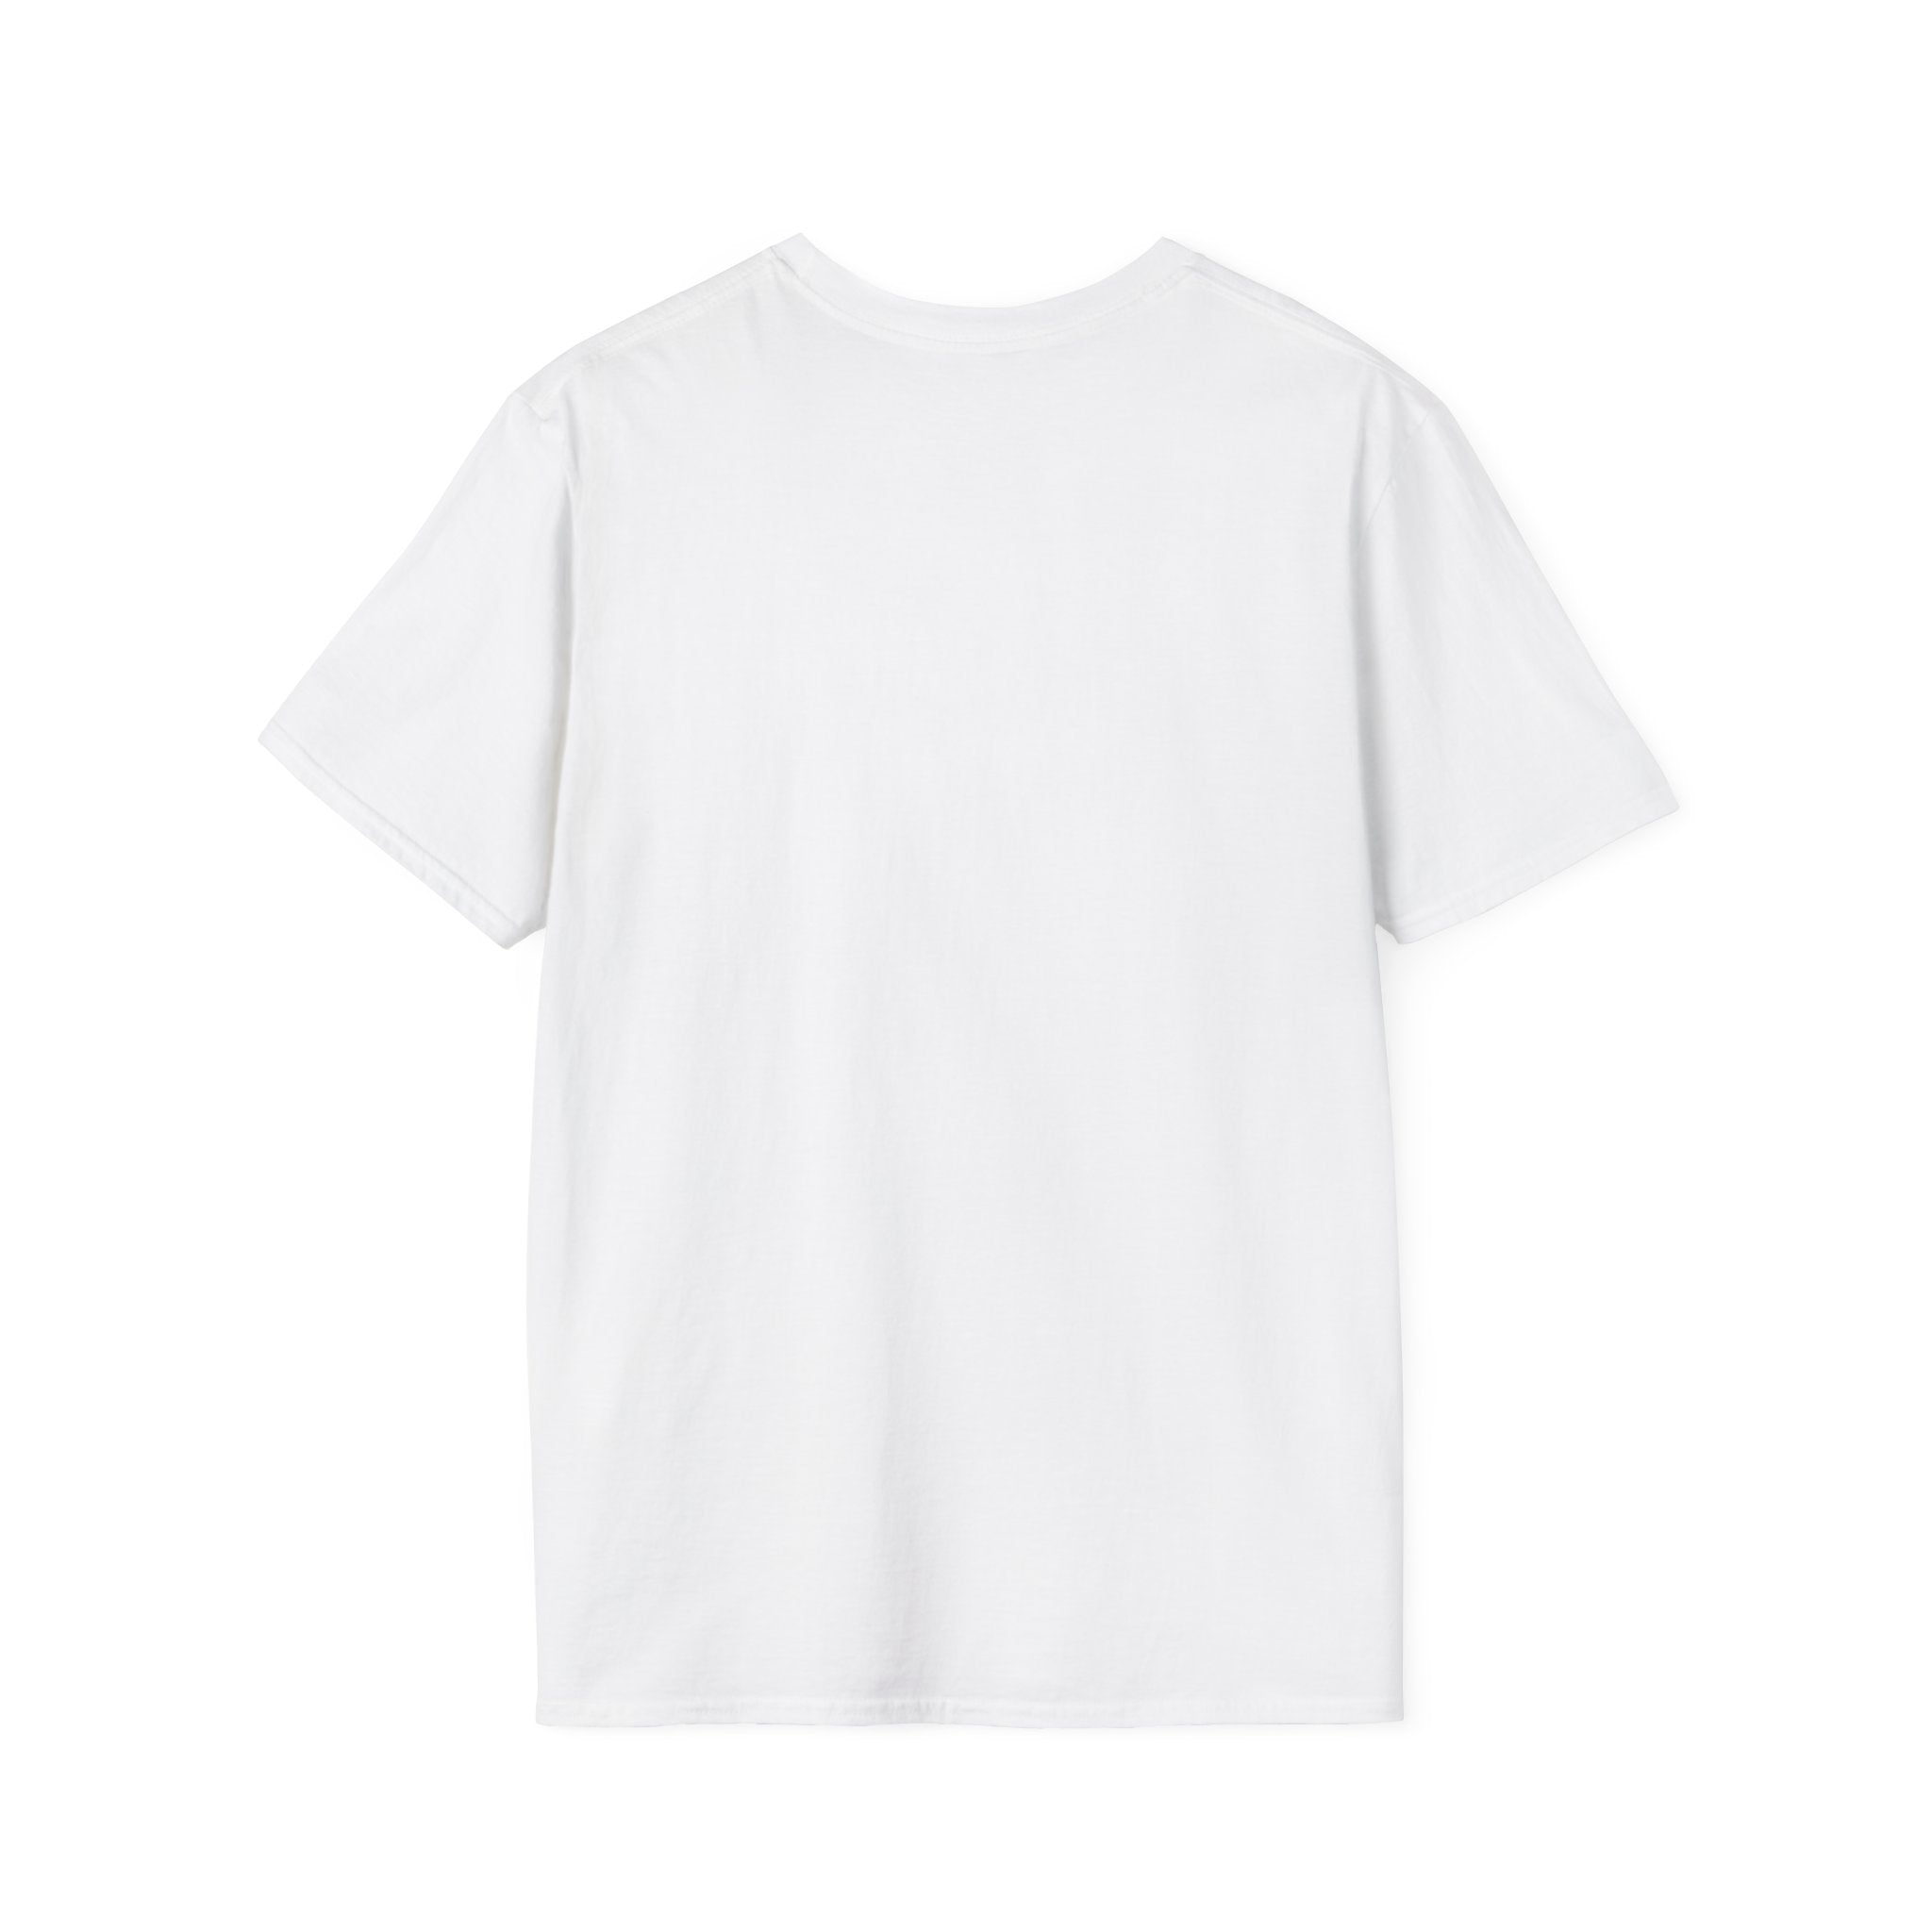 FURDreams “Sociopath” I Unisex Softstyle T-Shirt